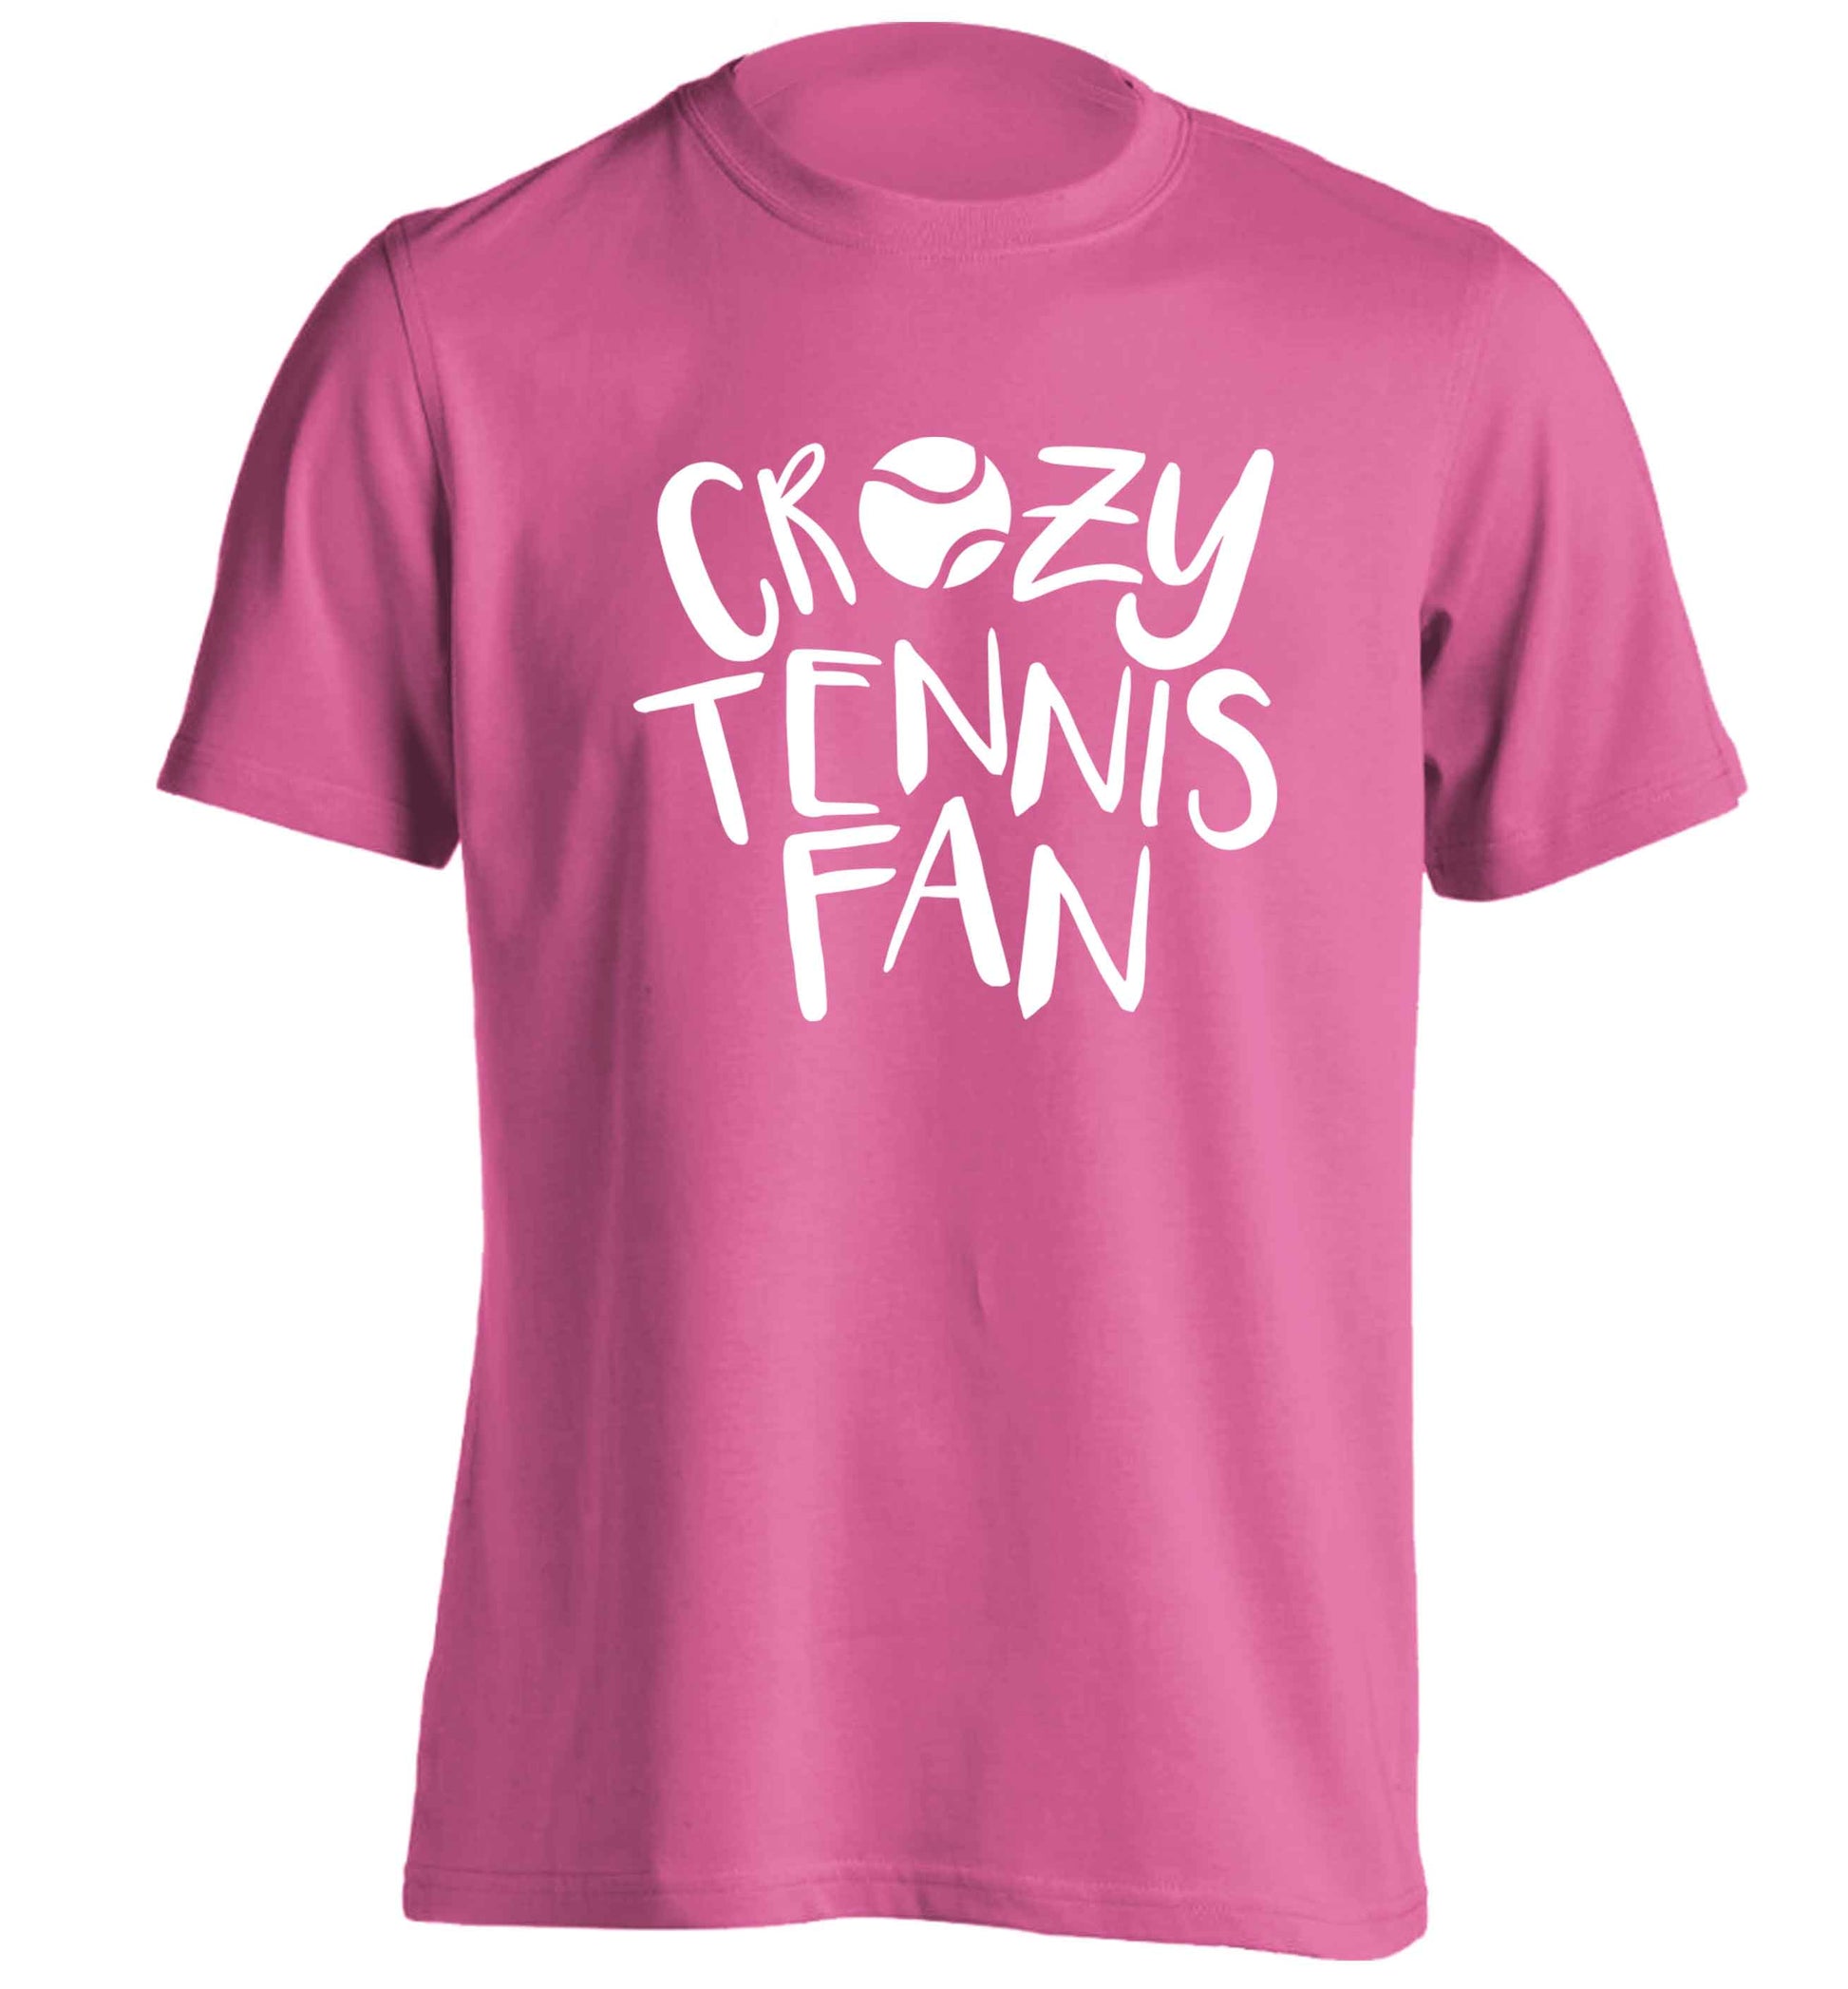 Crazy tennis fan adults unisex pink Tshirt 2XL